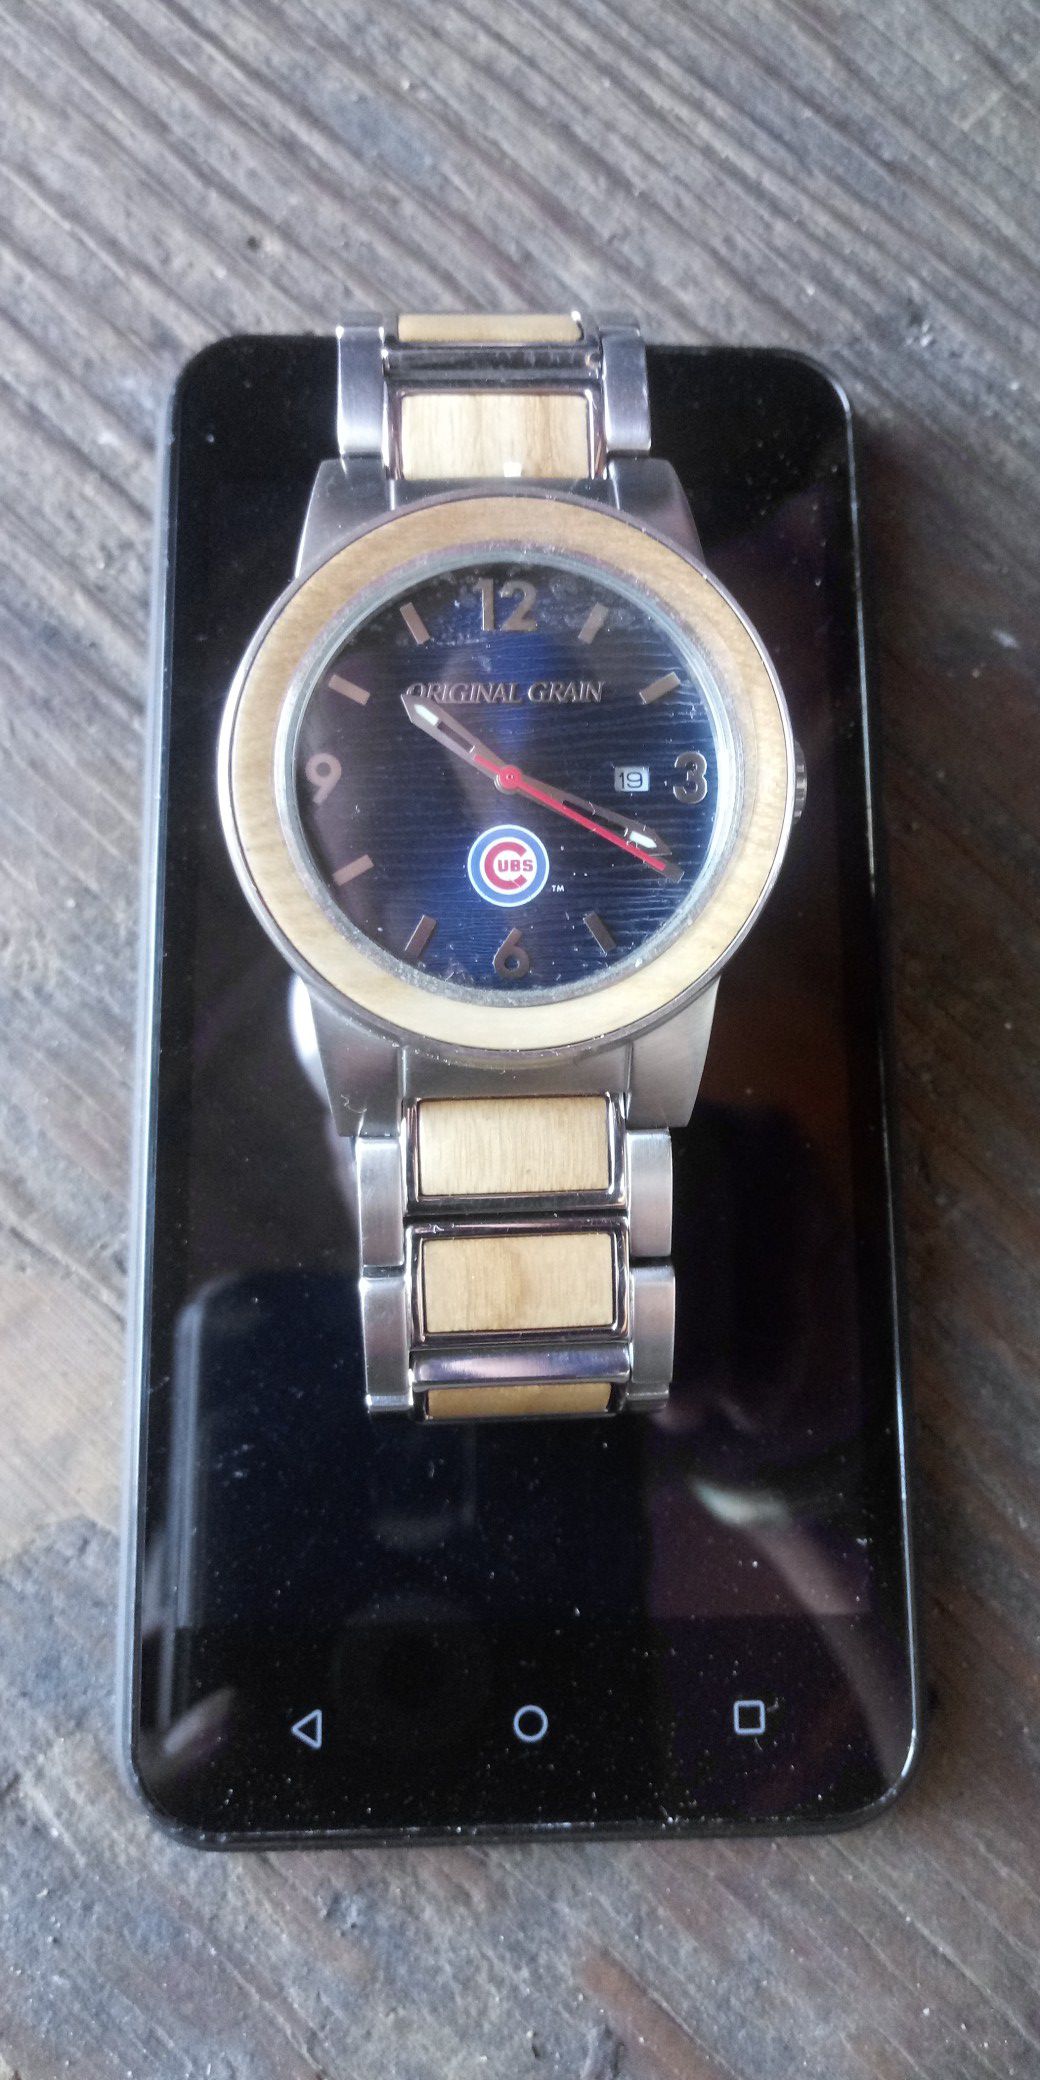 Original Grain watch.....chicago cubschampionship watch